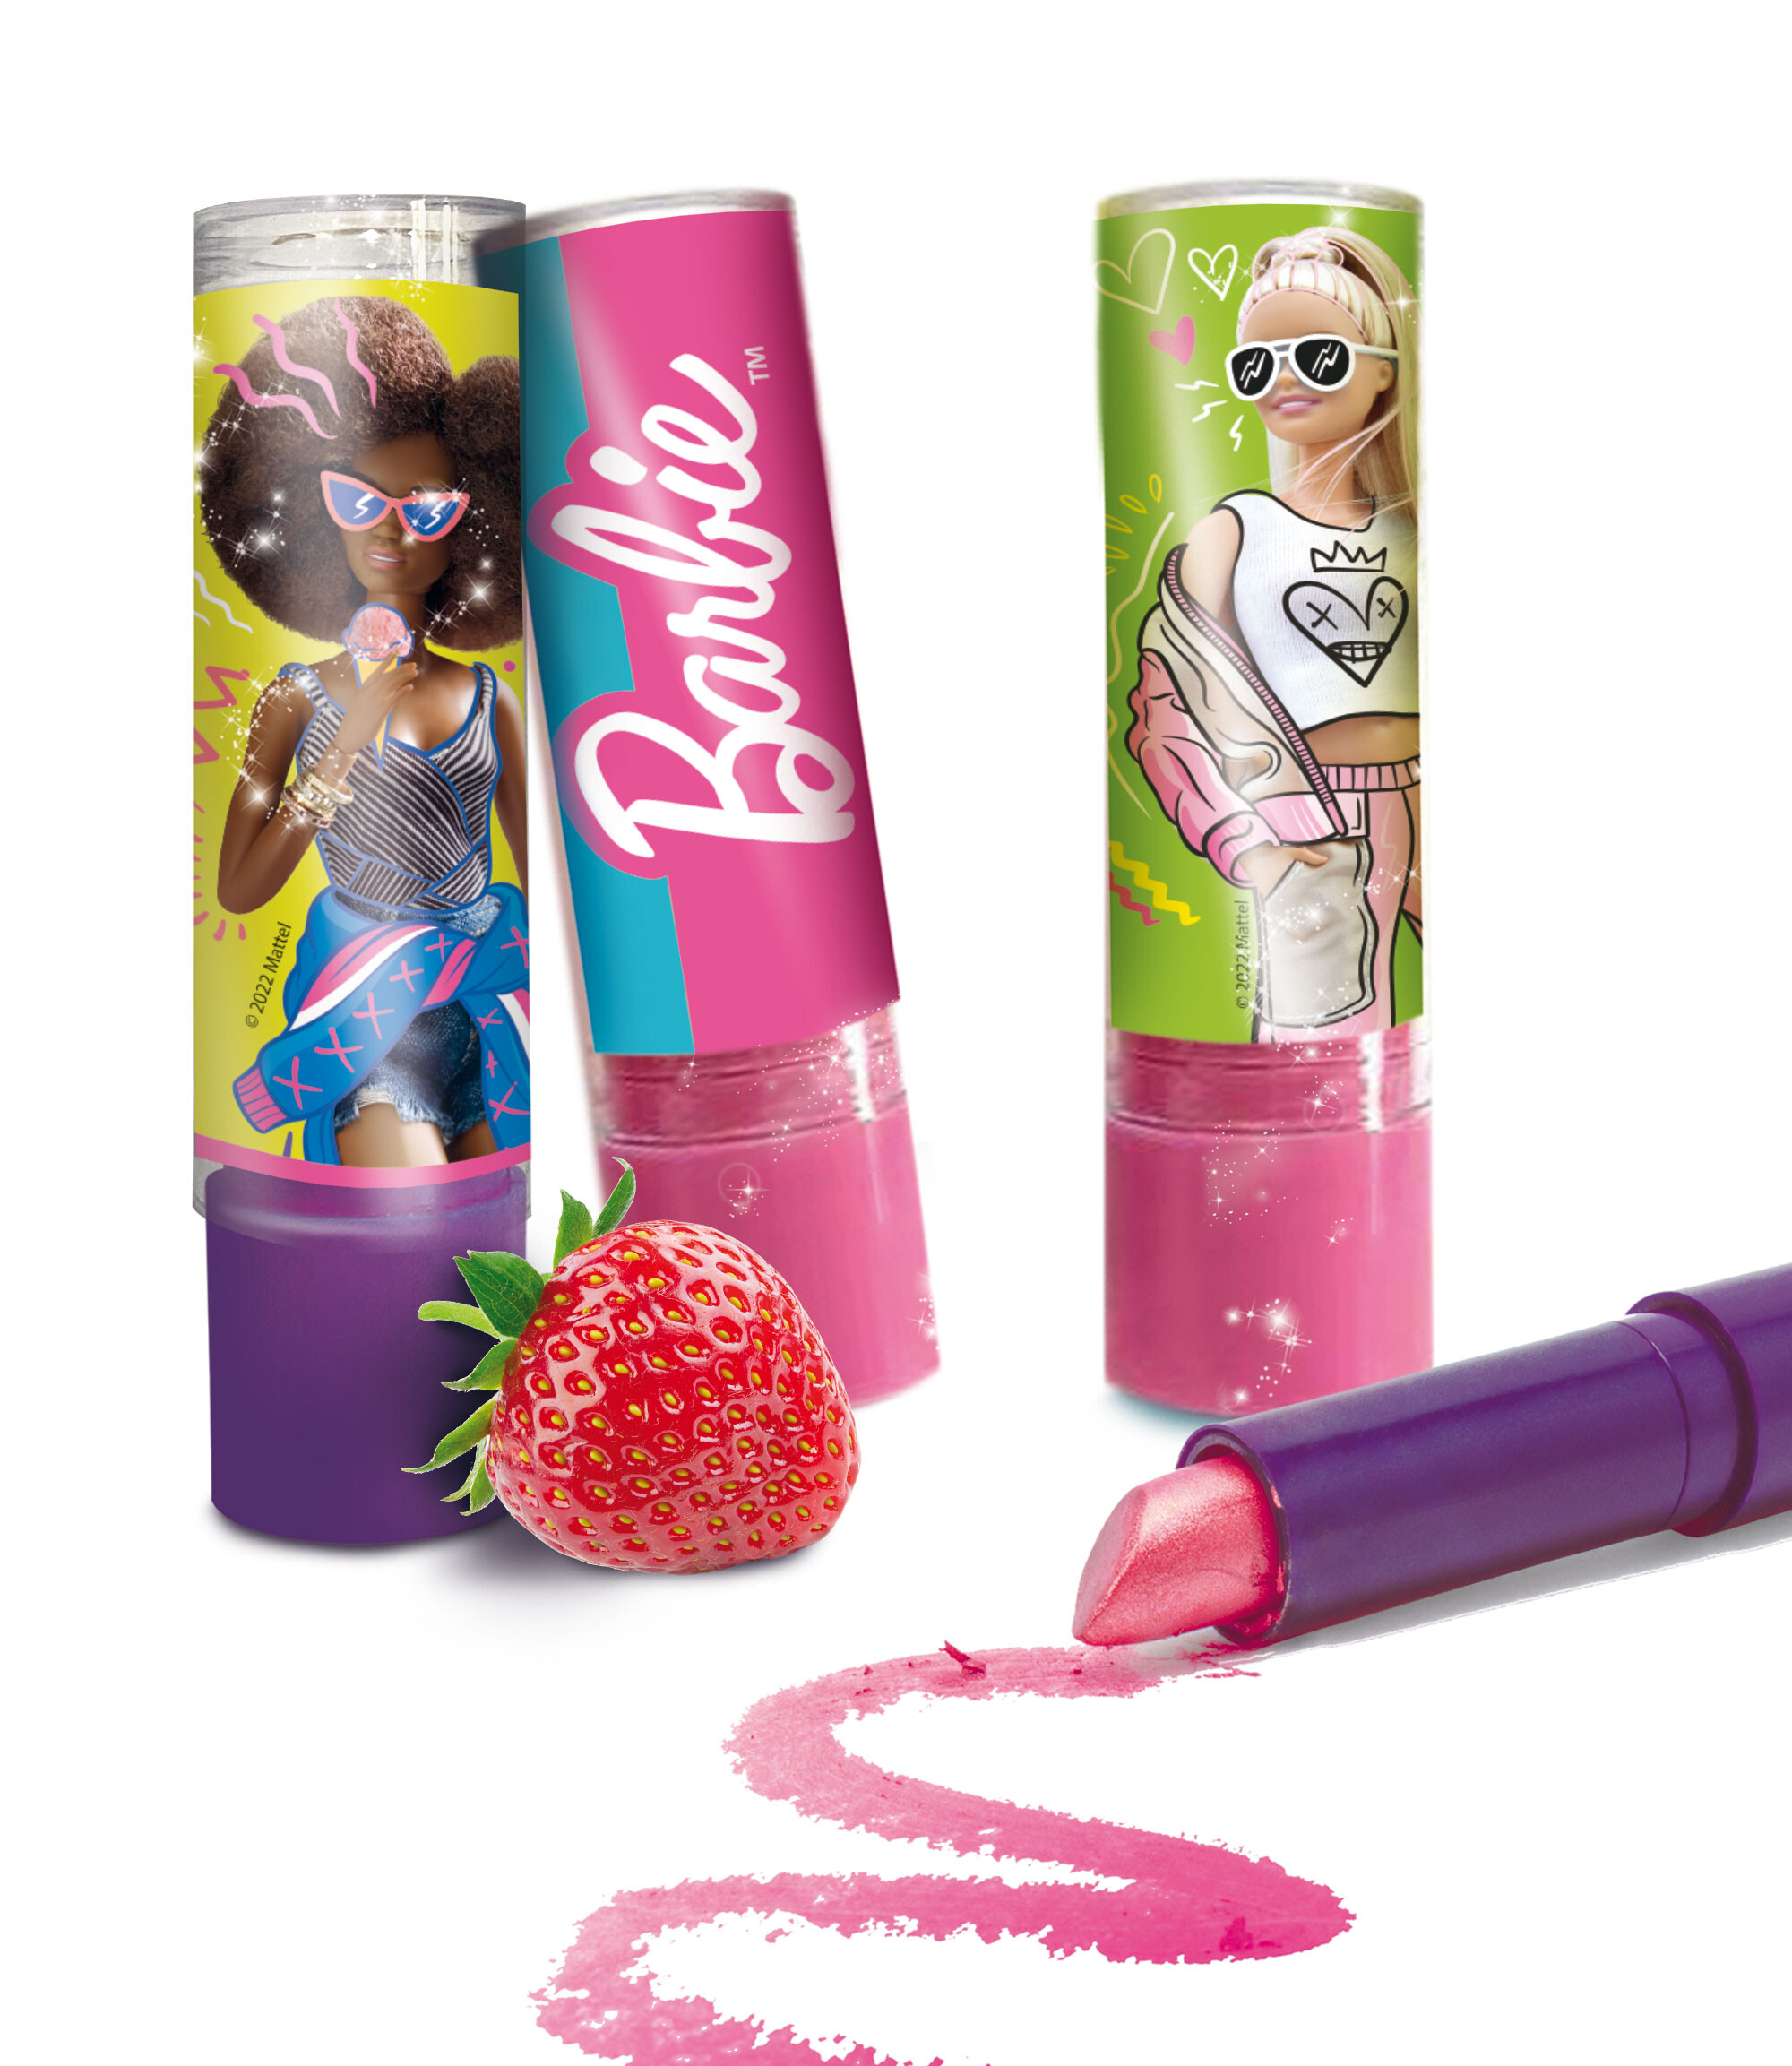 Barbie my lipstick color change - LISCIANI, Barbie